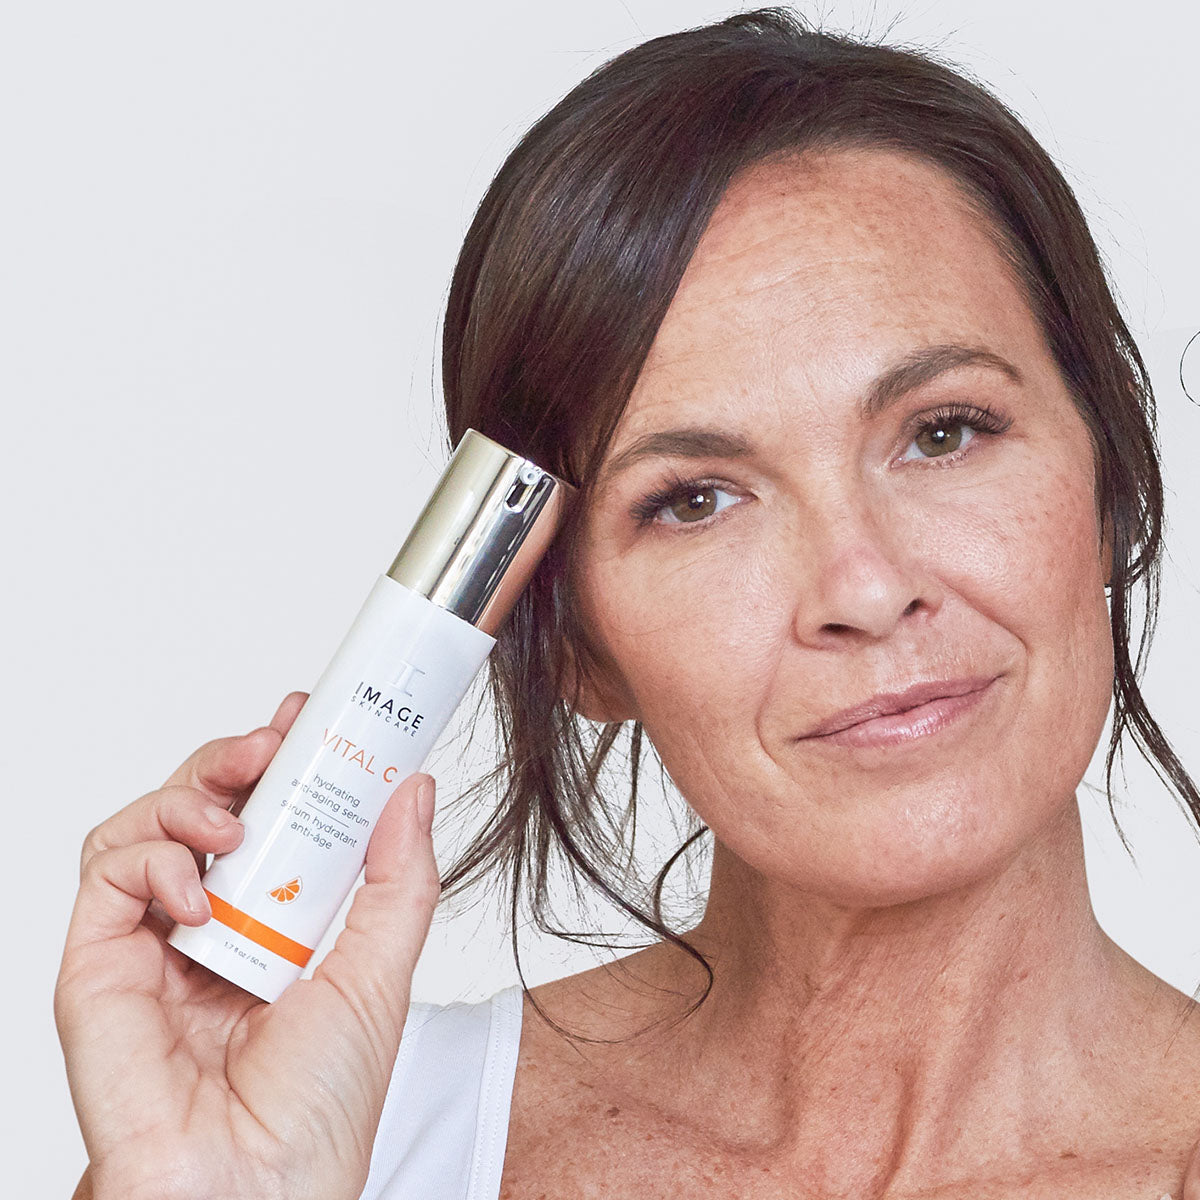 Woman holding a bottle of Image Skincare anti aging vitamin C serum VITAL C.